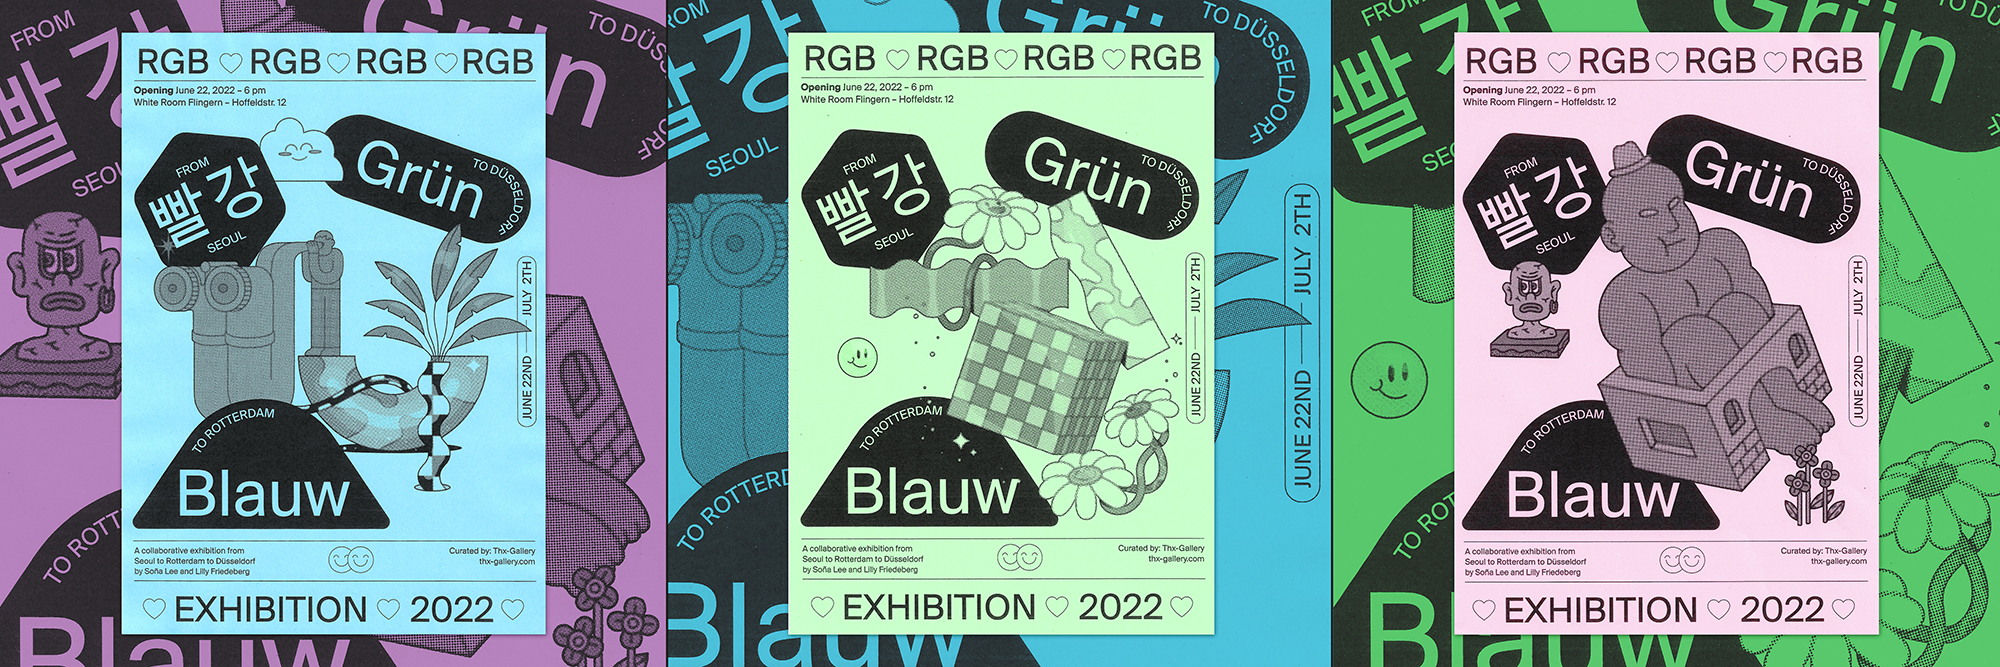 RGB_Exhibition_invitation